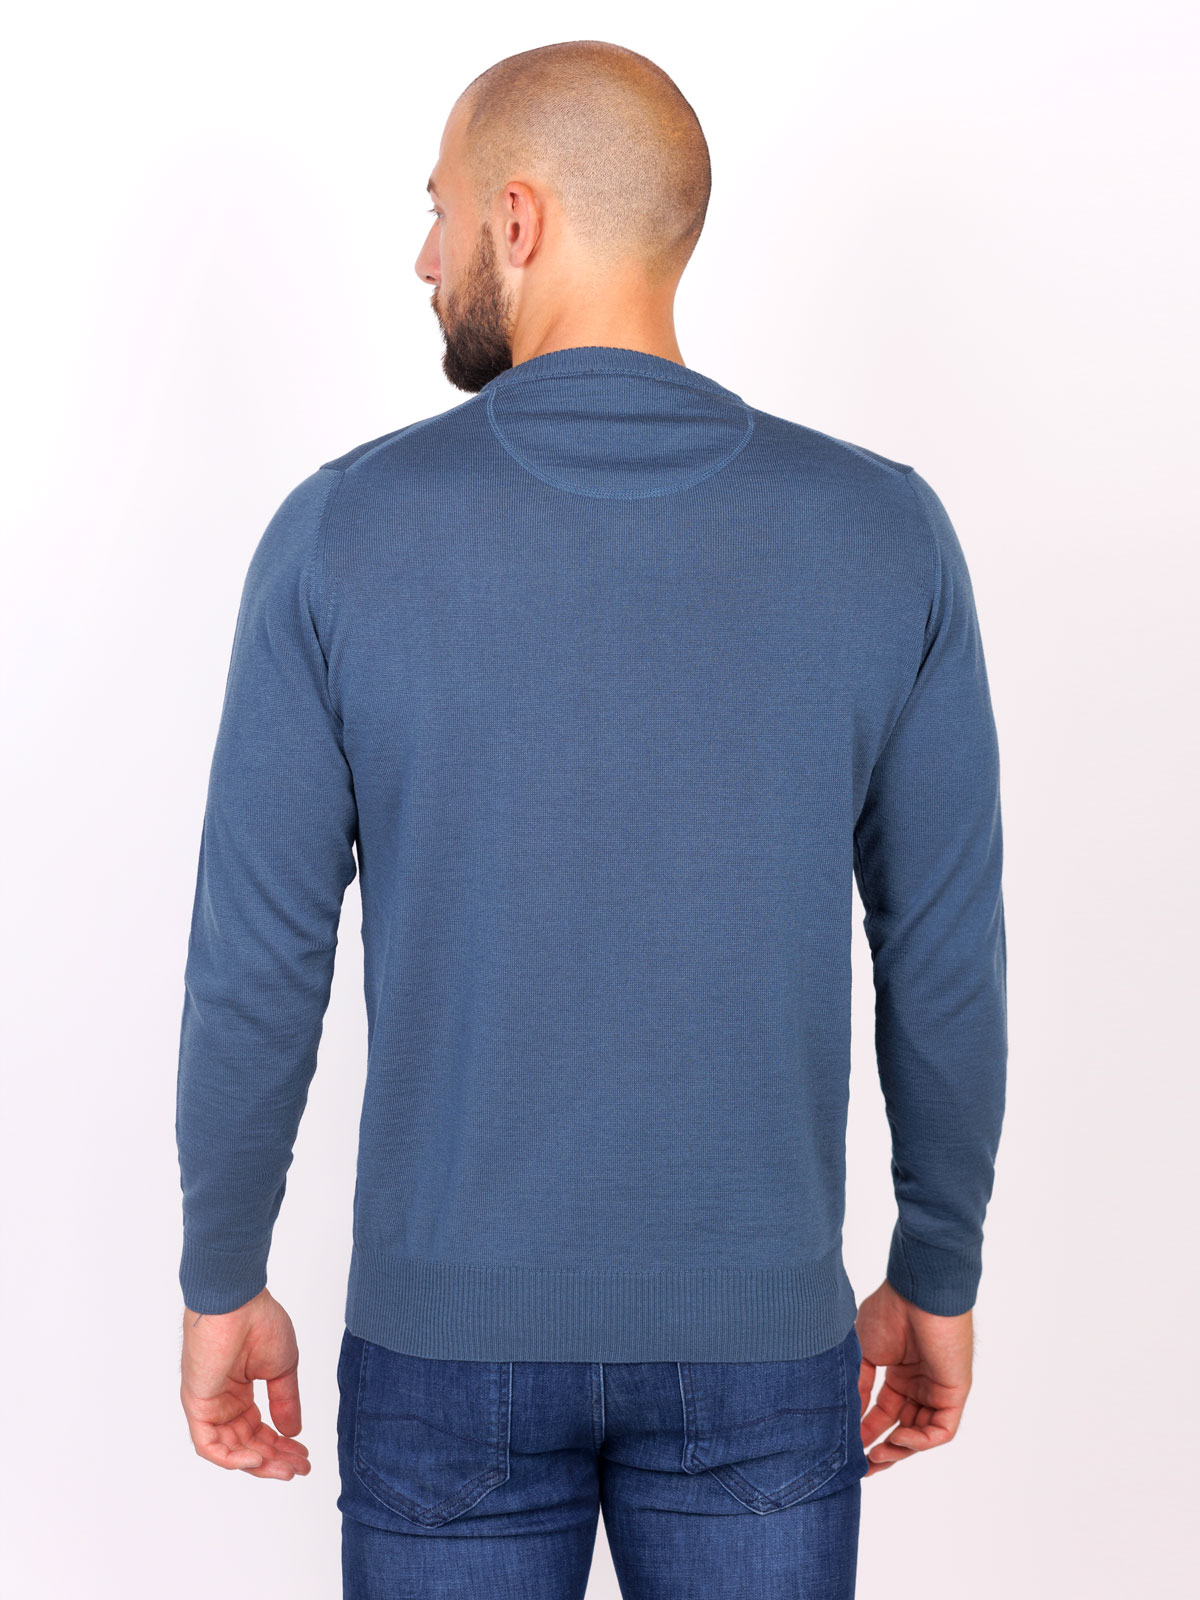 Sweater in petrol blue - 33096 € 42.74 img2